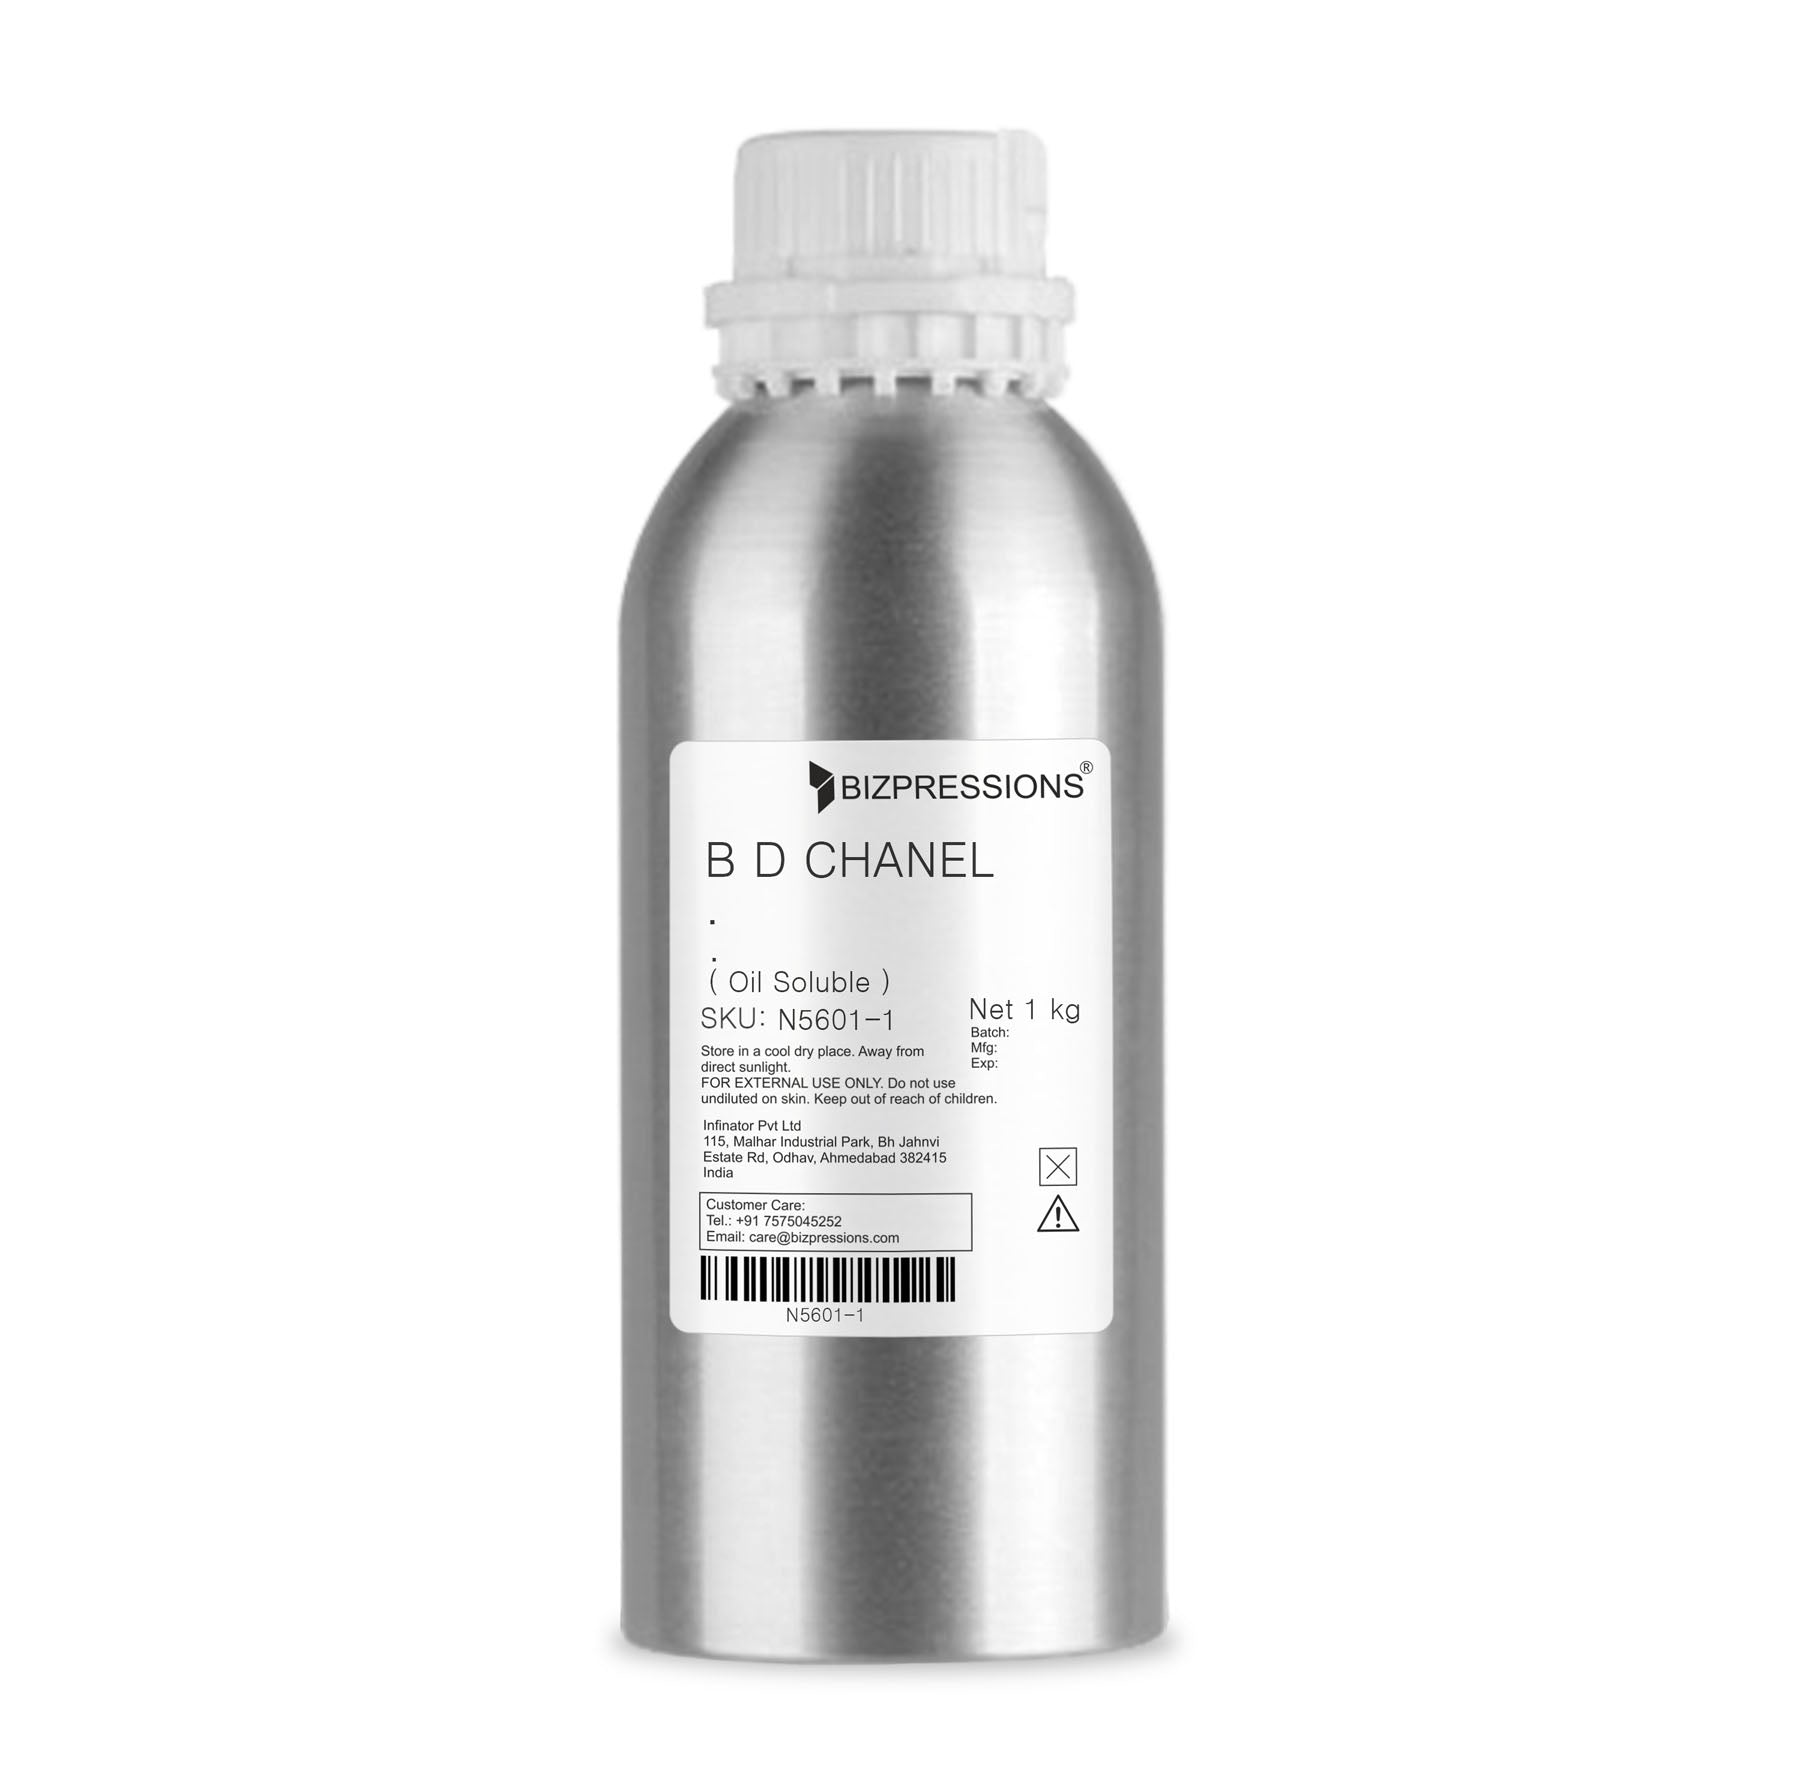 B D CHANEL - Fragrance ( Oil Soluble ) - 1 kg